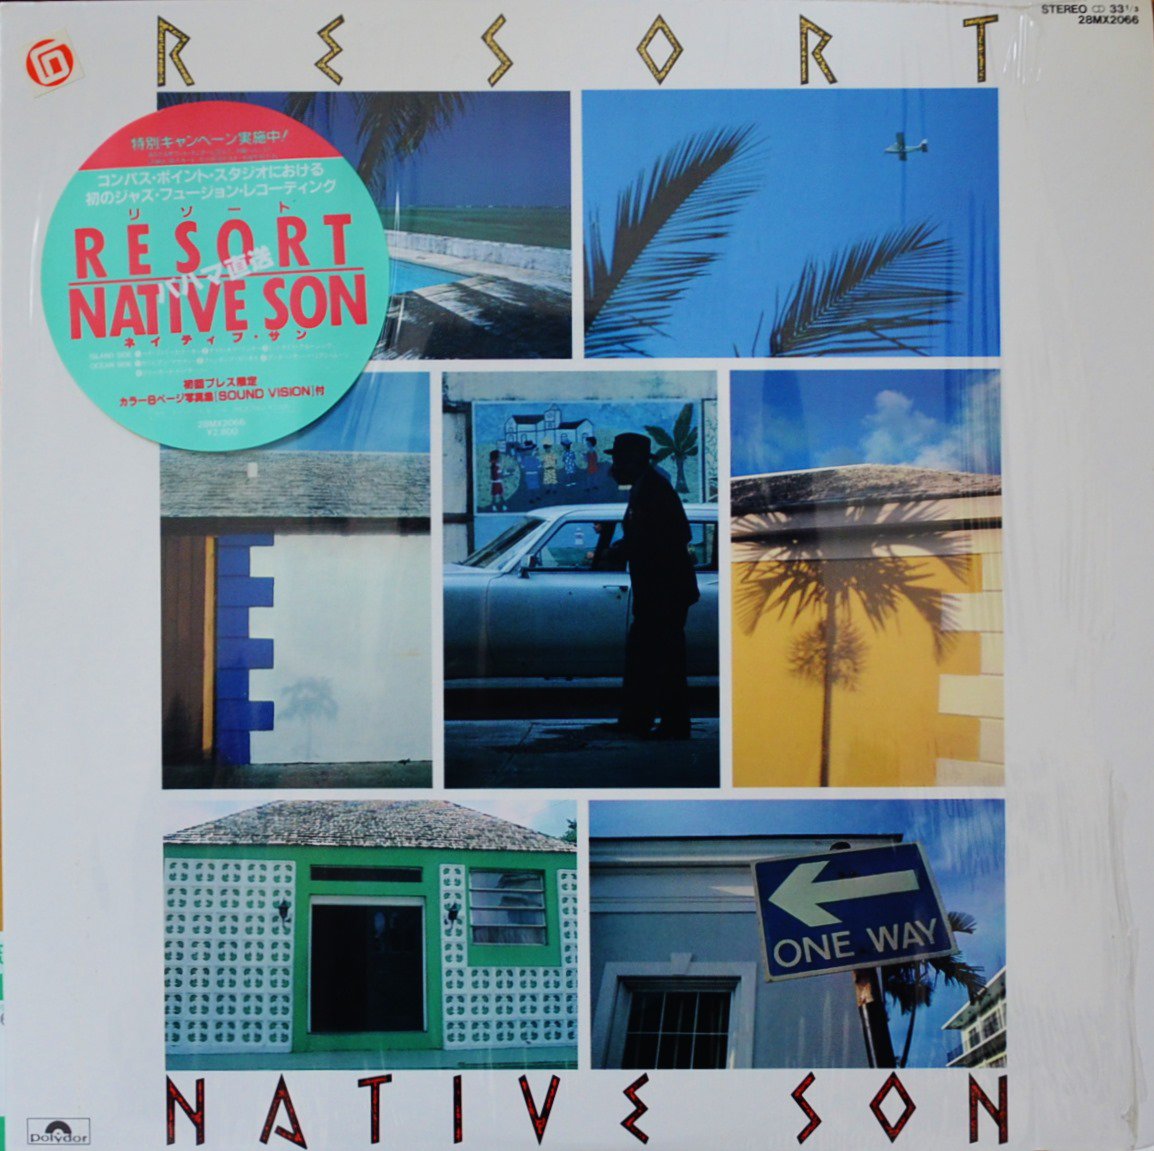 NATIVE SON ネイティブ・サン / リゾート RESORT (LP) - HIP TANK RECORDS